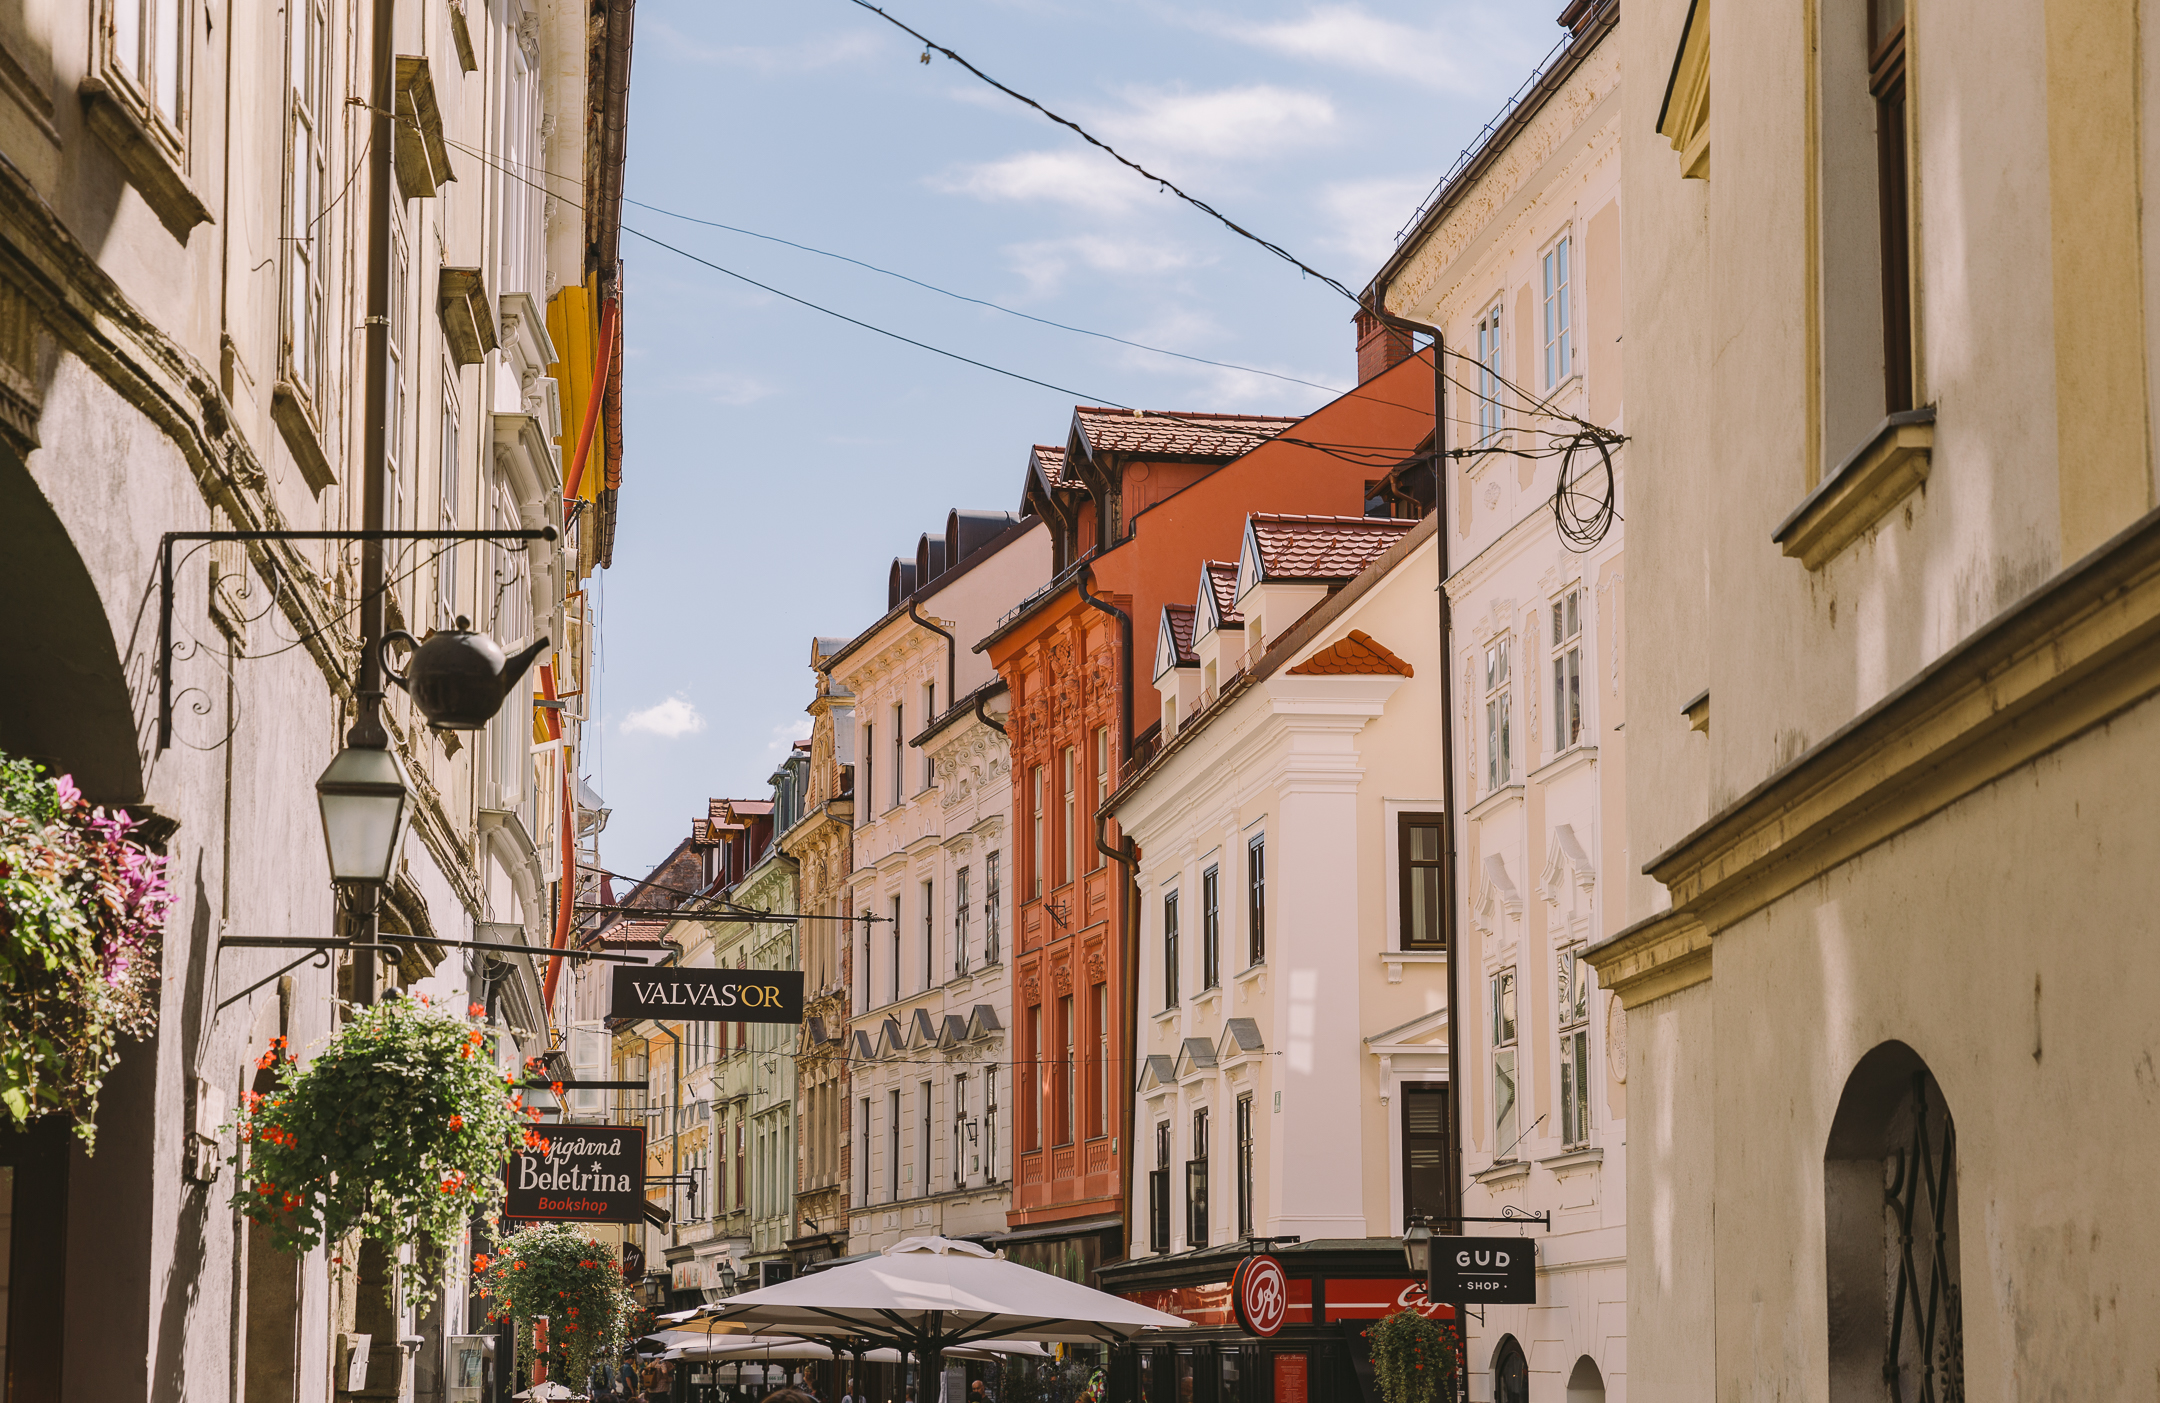 Ljubljana, Slovenia's charming capital